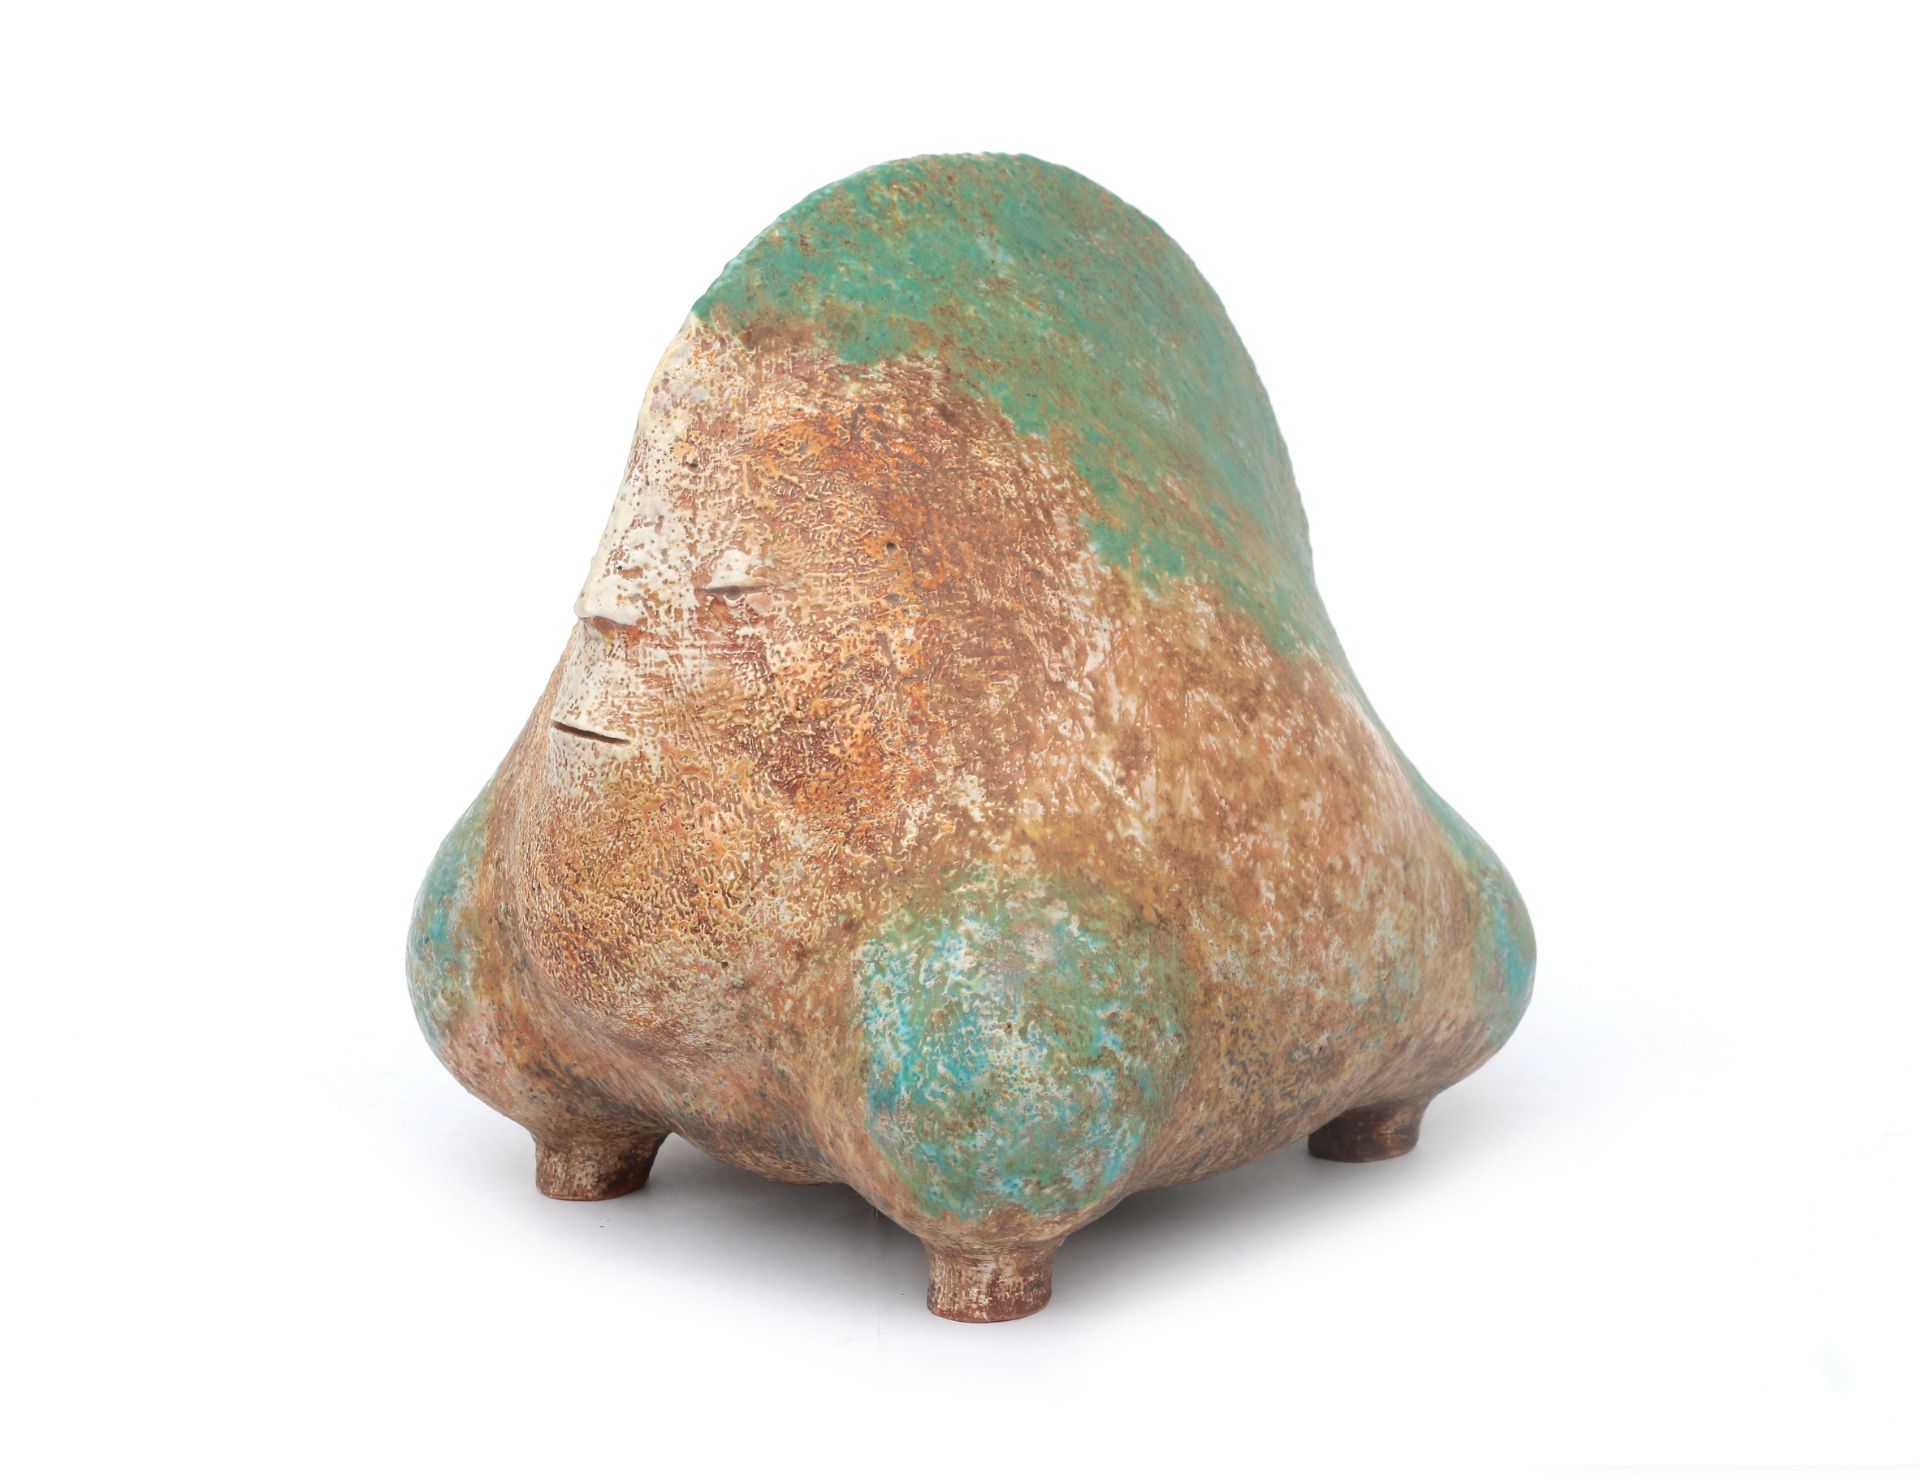 Hans de Jong (1932-2011) A ceramic figure, "Dier met hoge kam" (Animal with tall comb), green, brown